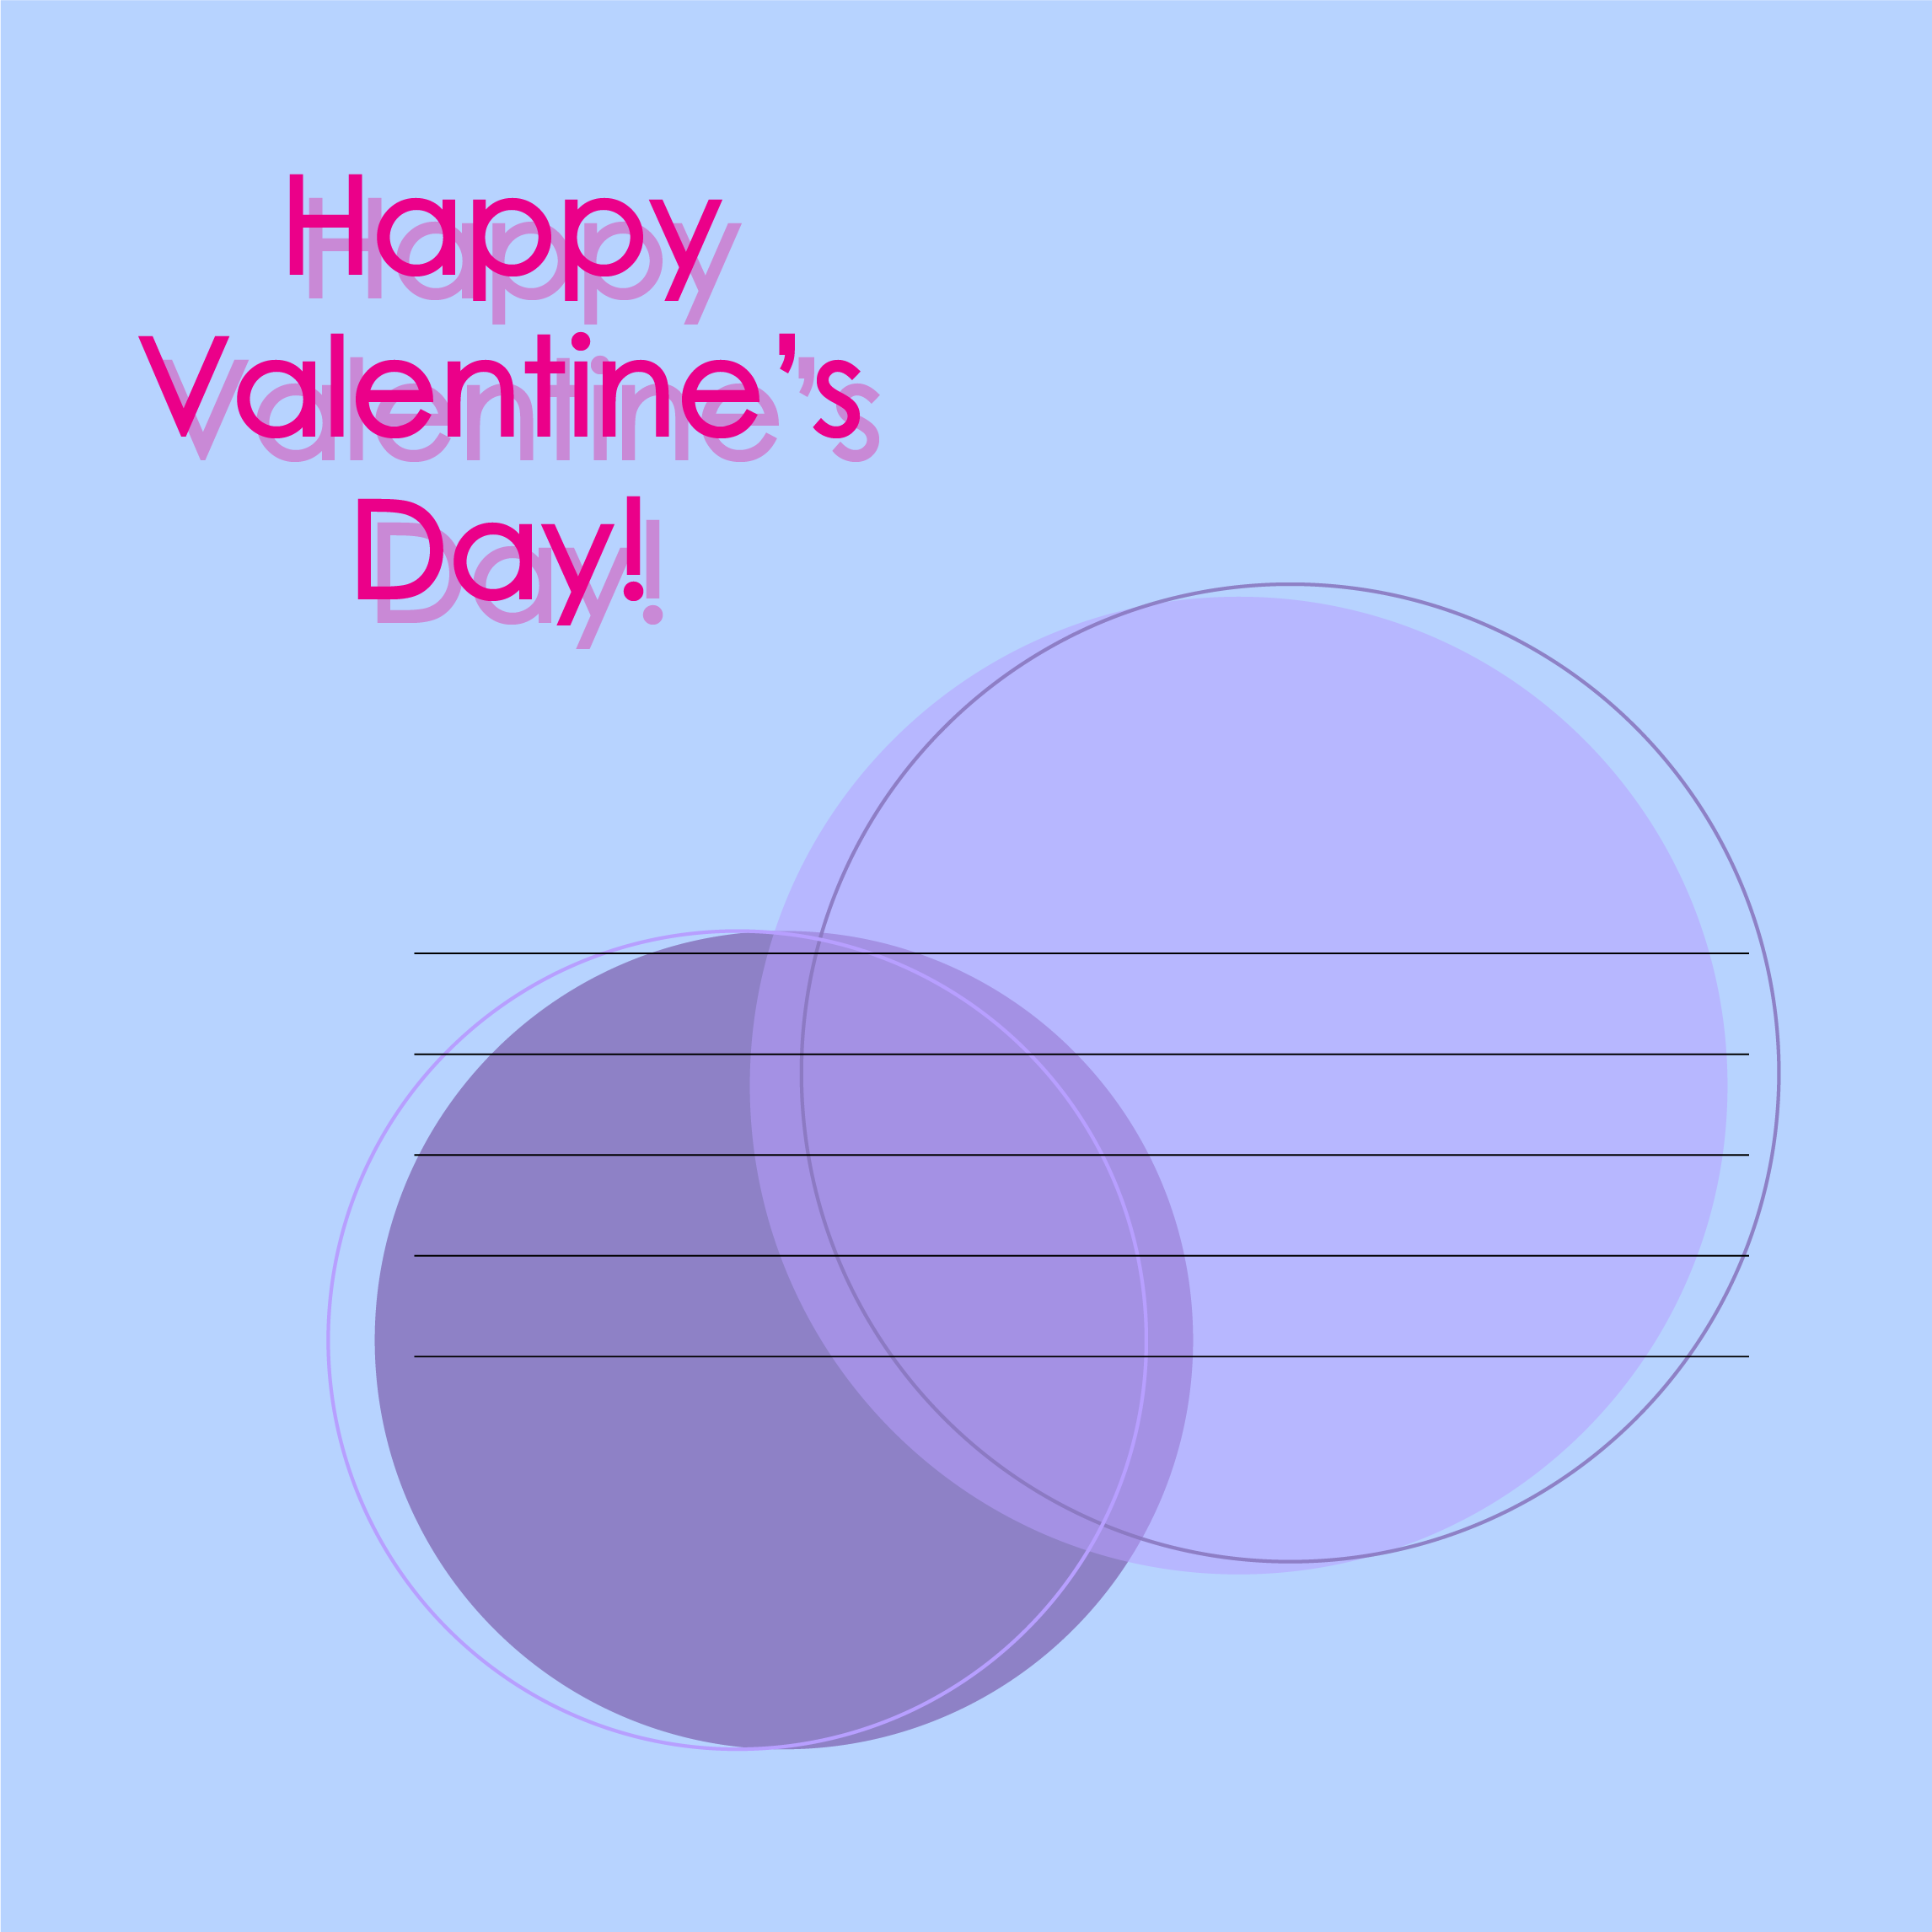 Valentine – Happy Valentine’s Day cover image.